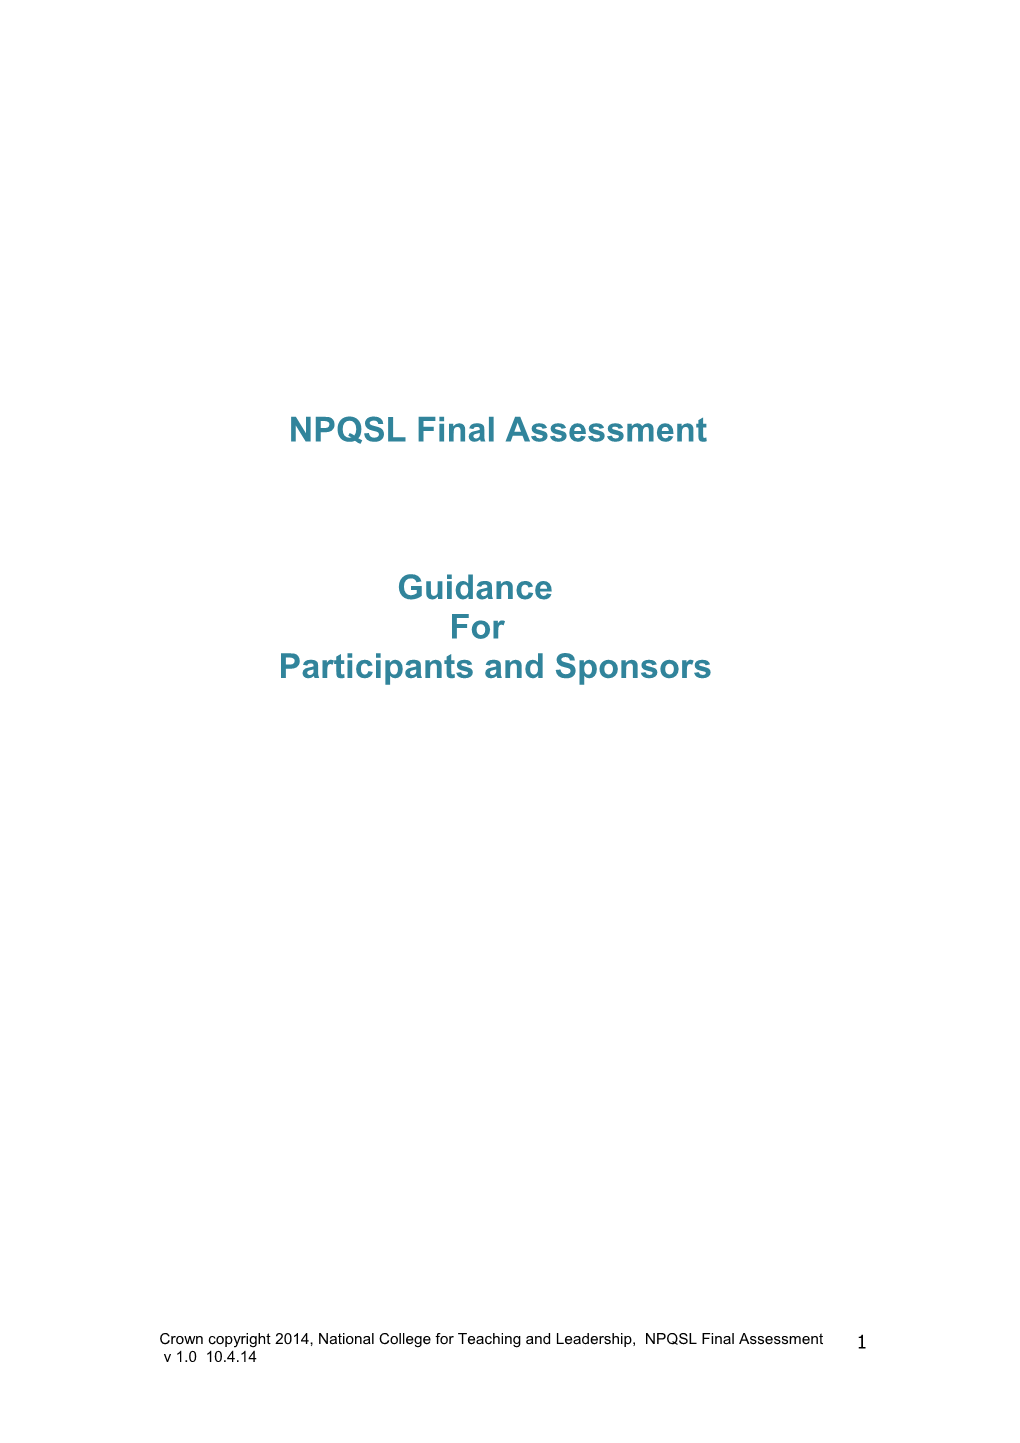 NPQH Final Assessment